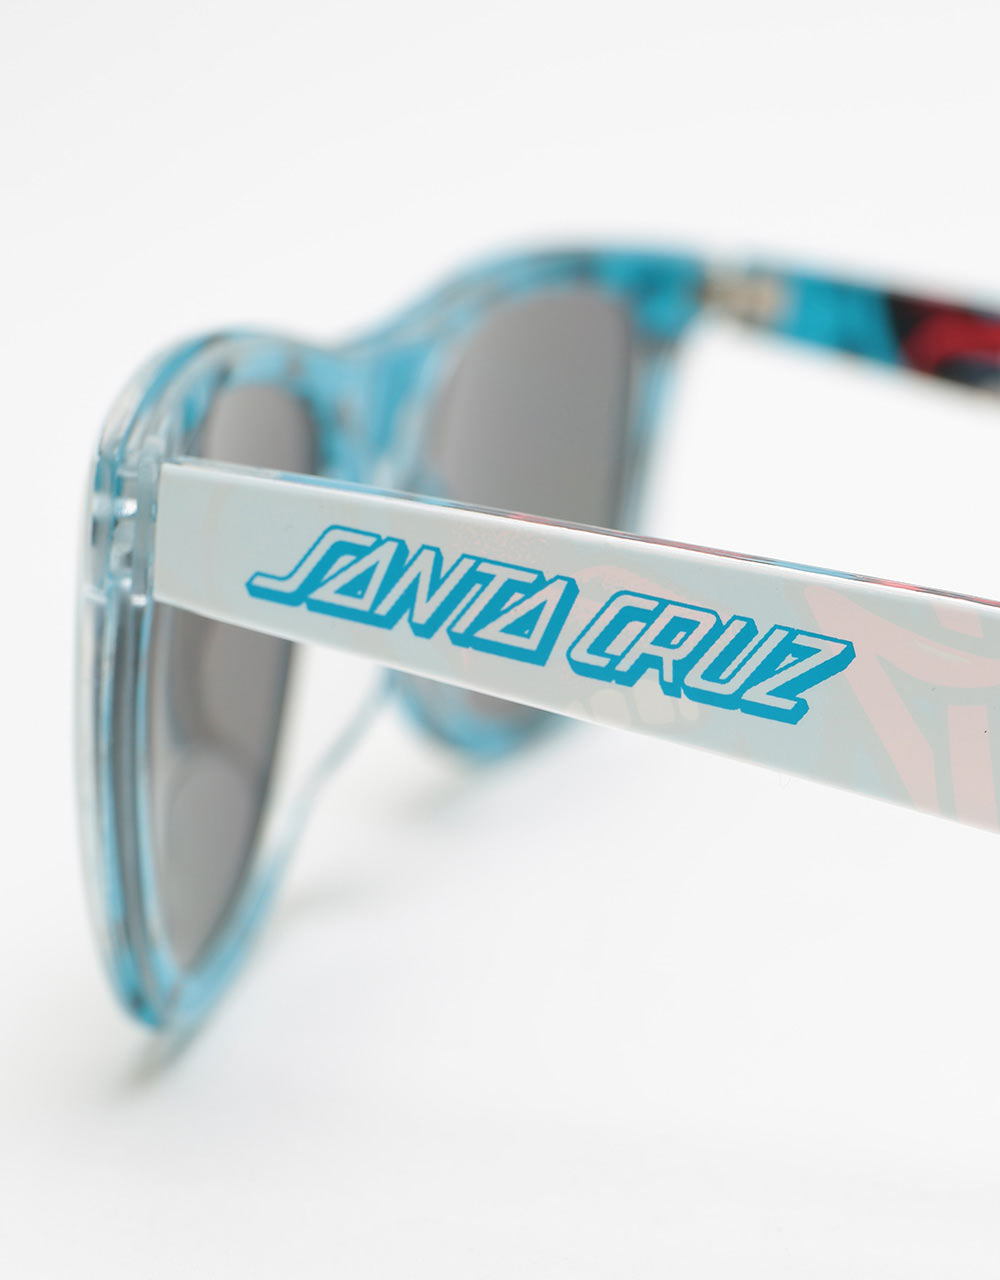 Santa Cruz Screaming Insider Sunglasses - White/Blue